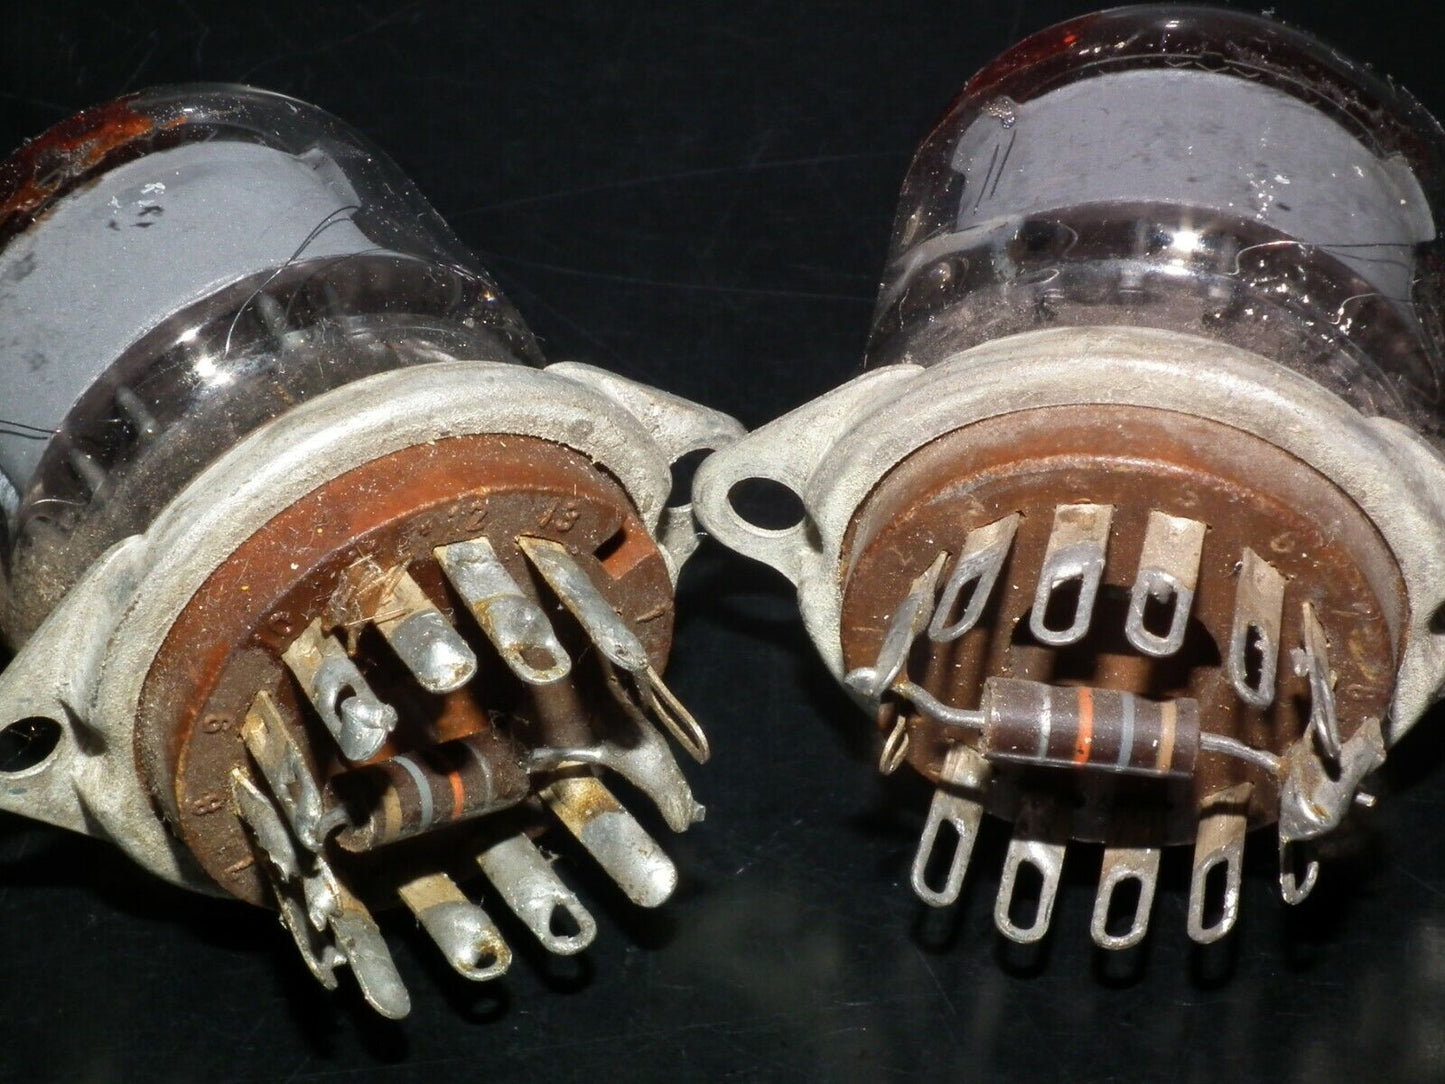 Two NIXIE tubes with original vintage NIXIE sockets